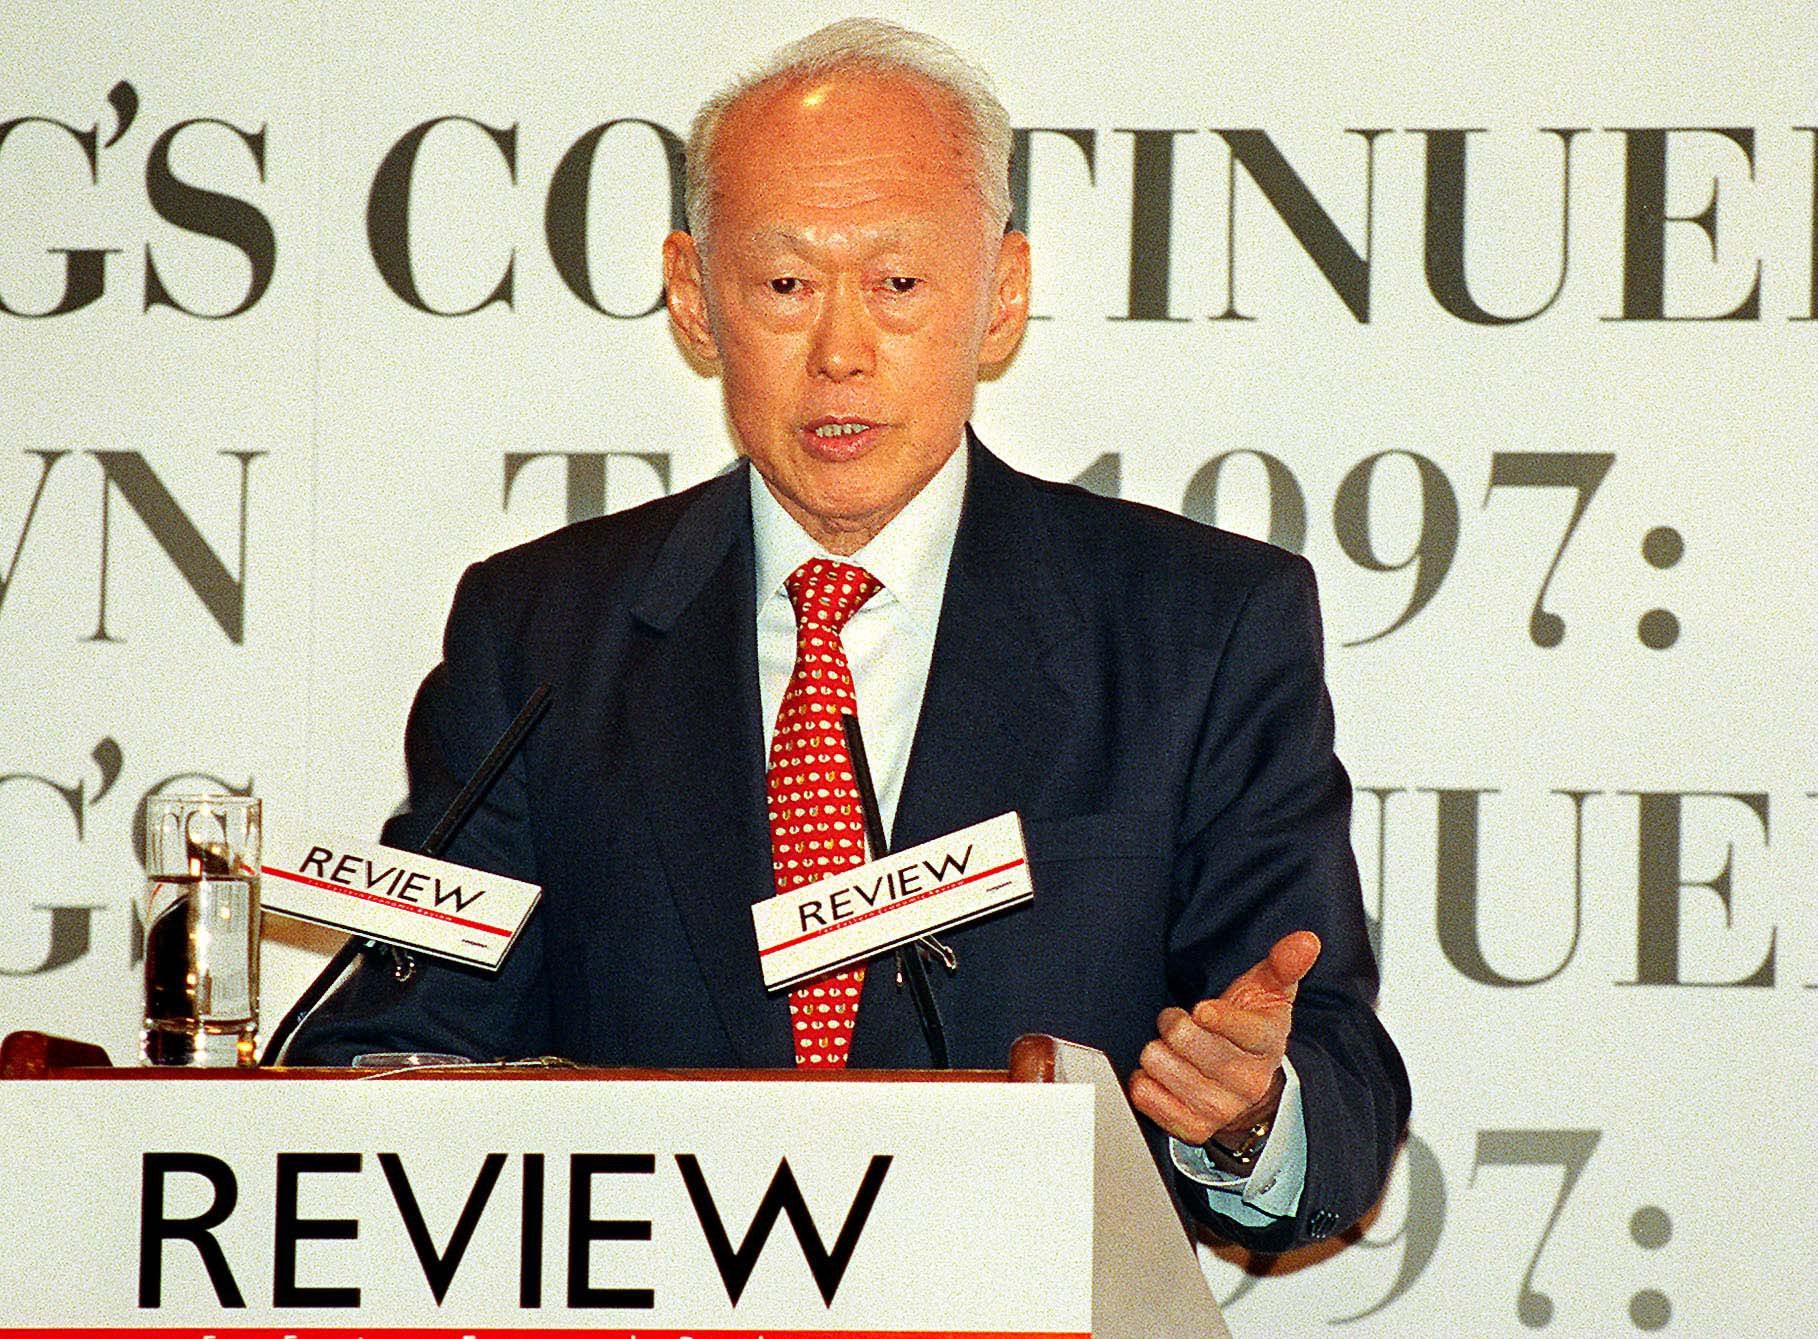 Singapore's late leader Lee Kuan Yew